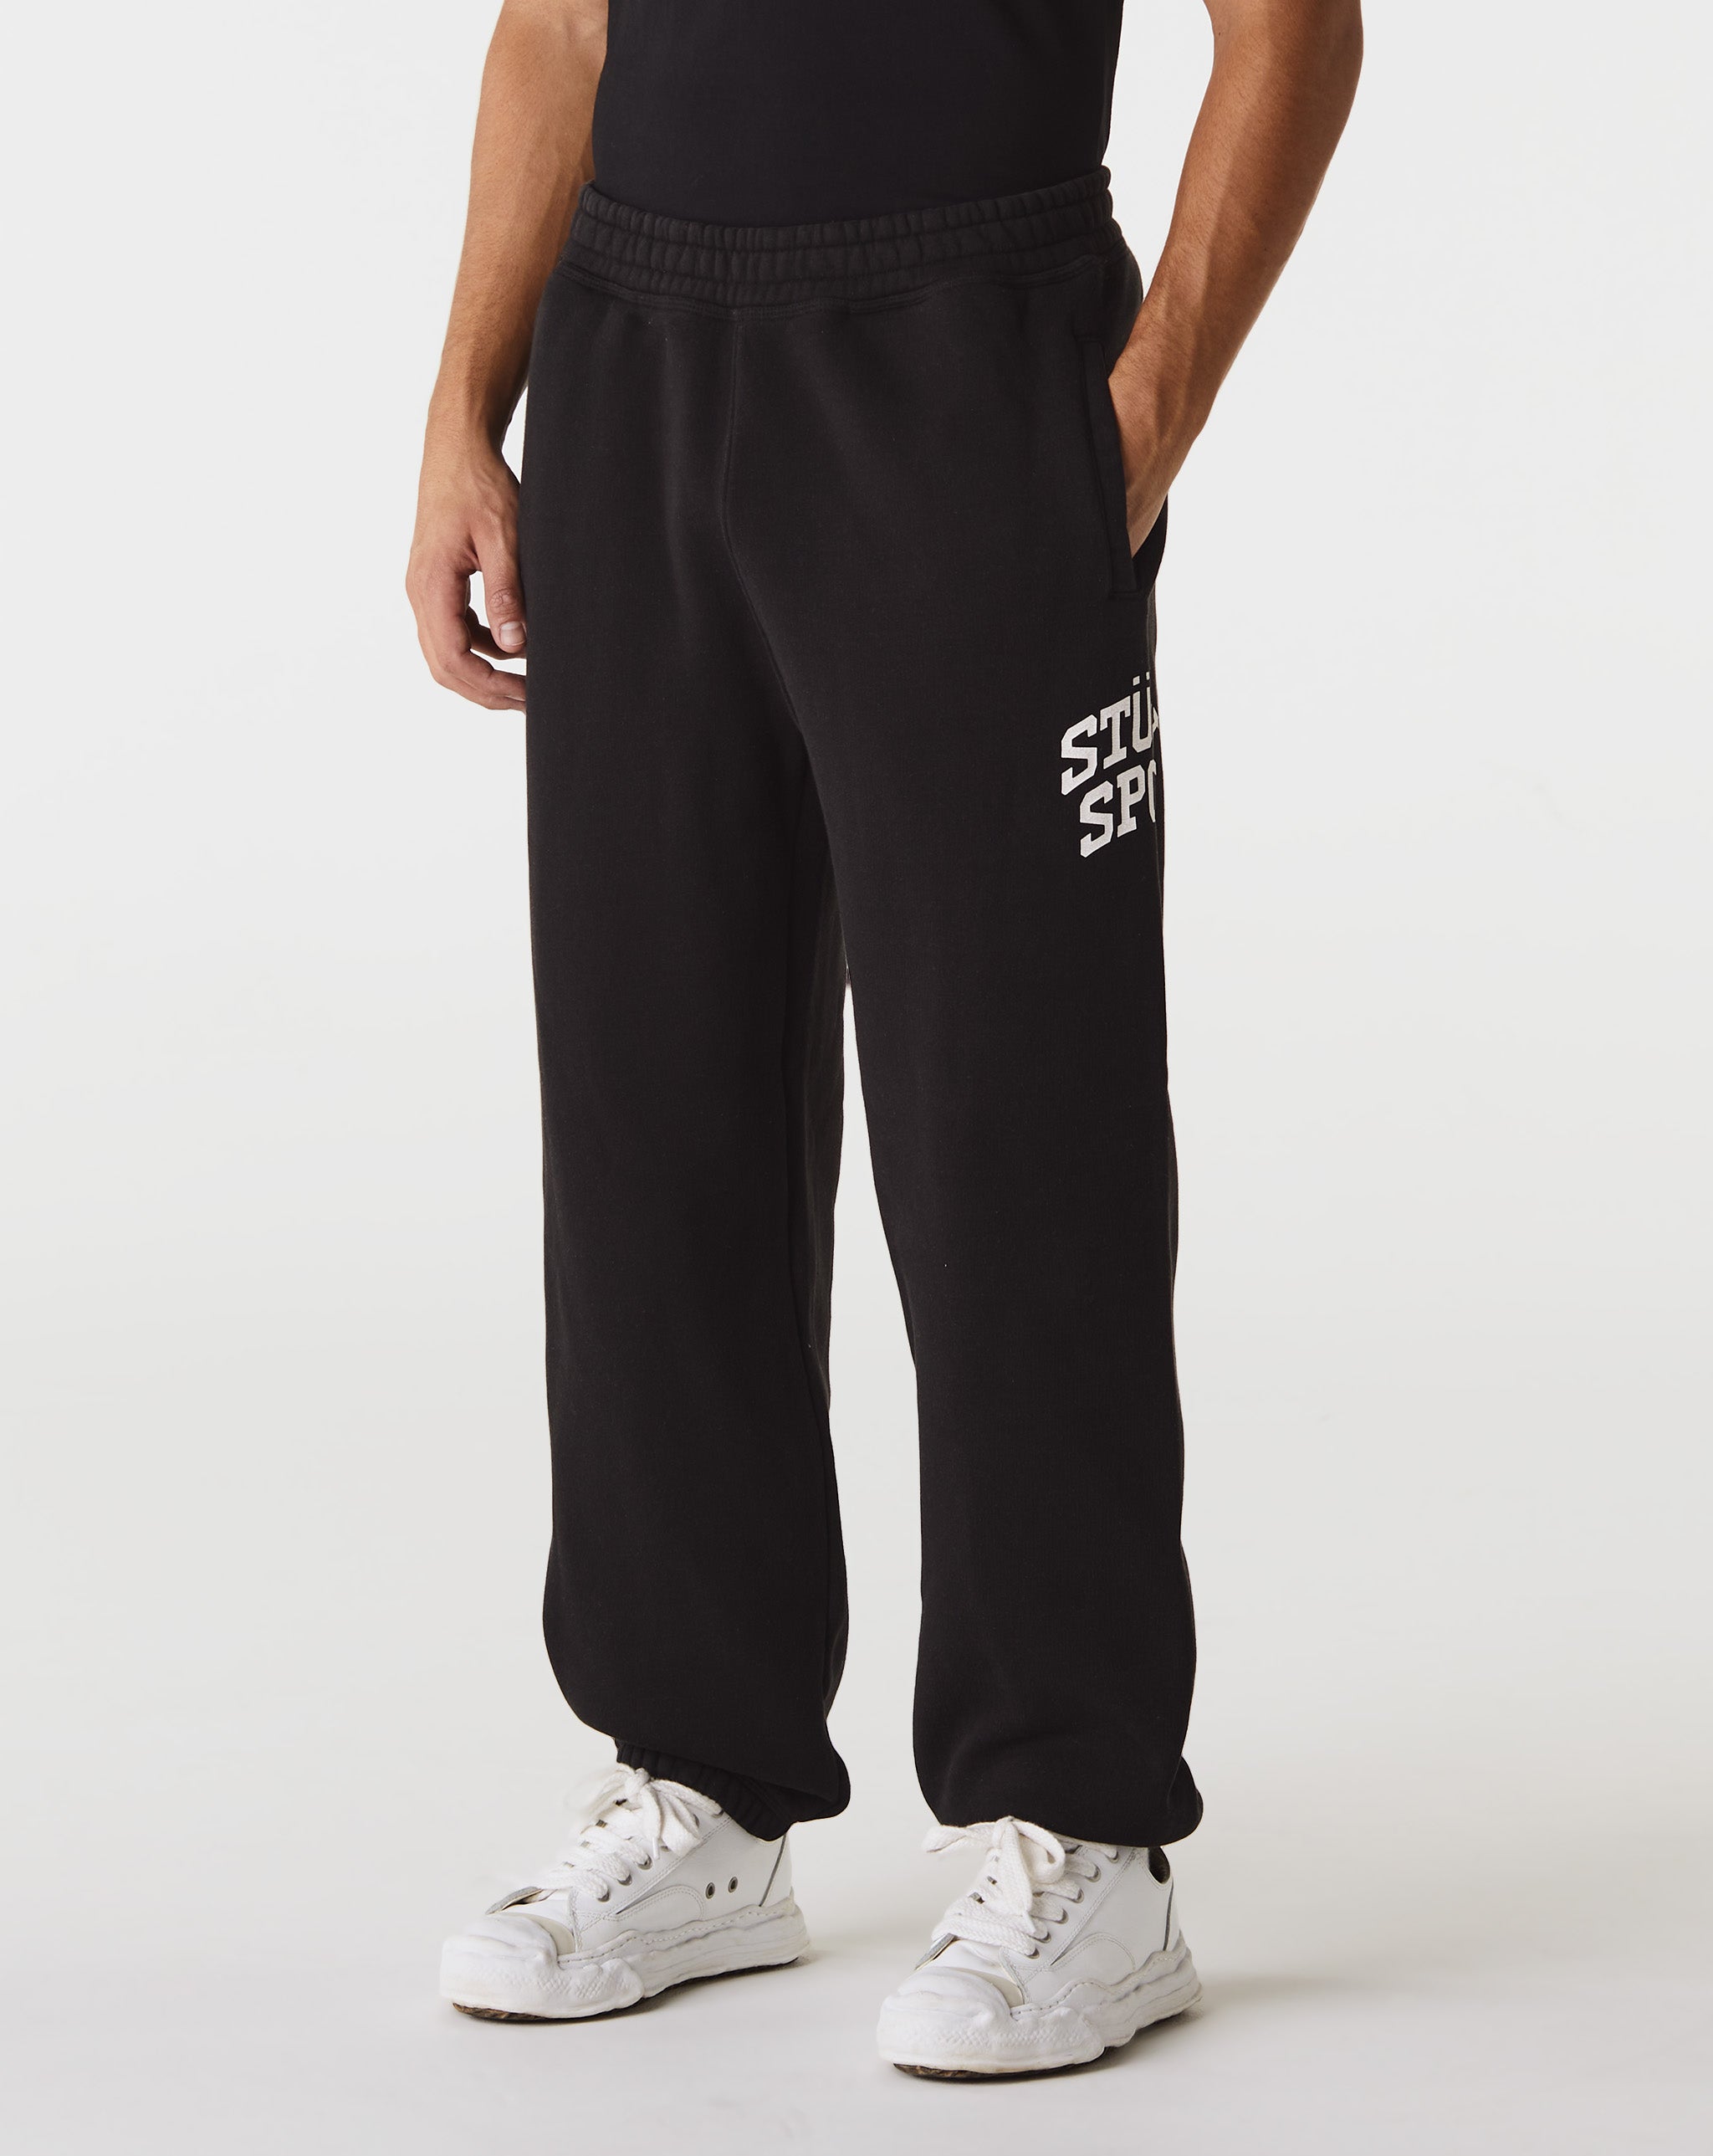 Stüssy Sport Crackle Fleece Pants  - Cheap 127-0 Jordan outlet